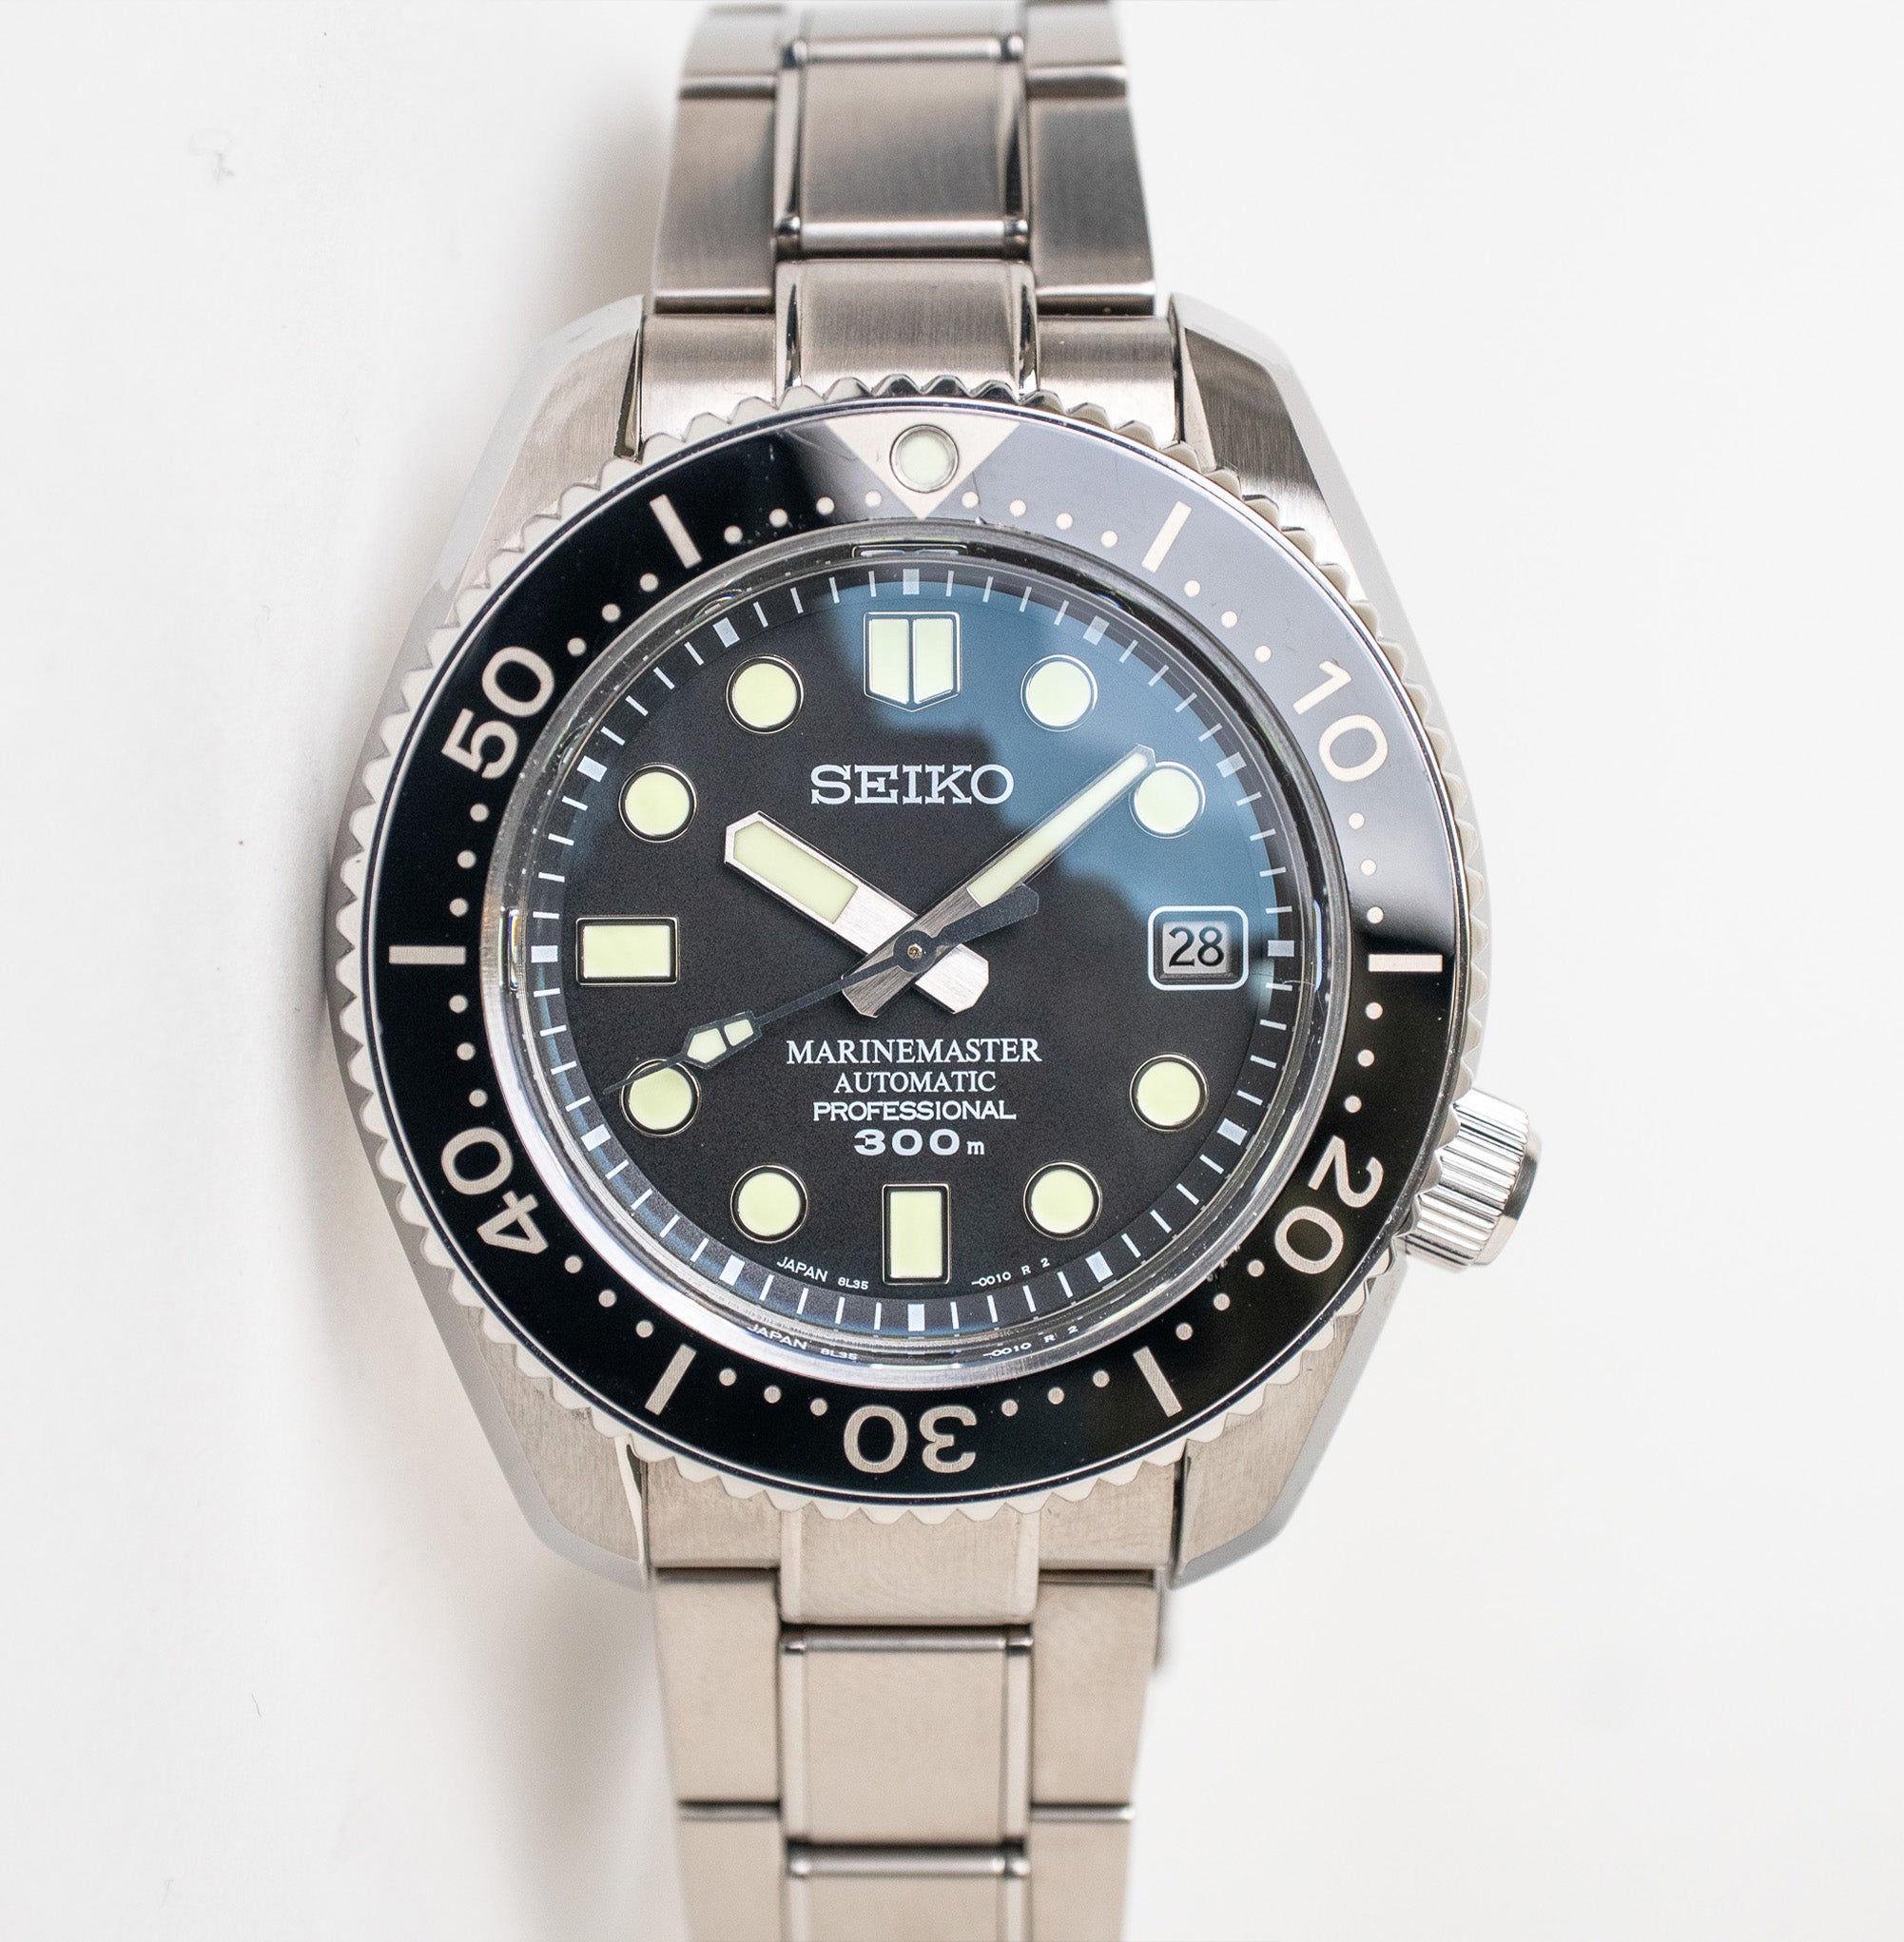 Seiko Marinemaster 300M SBDX017 – Belmont Watches